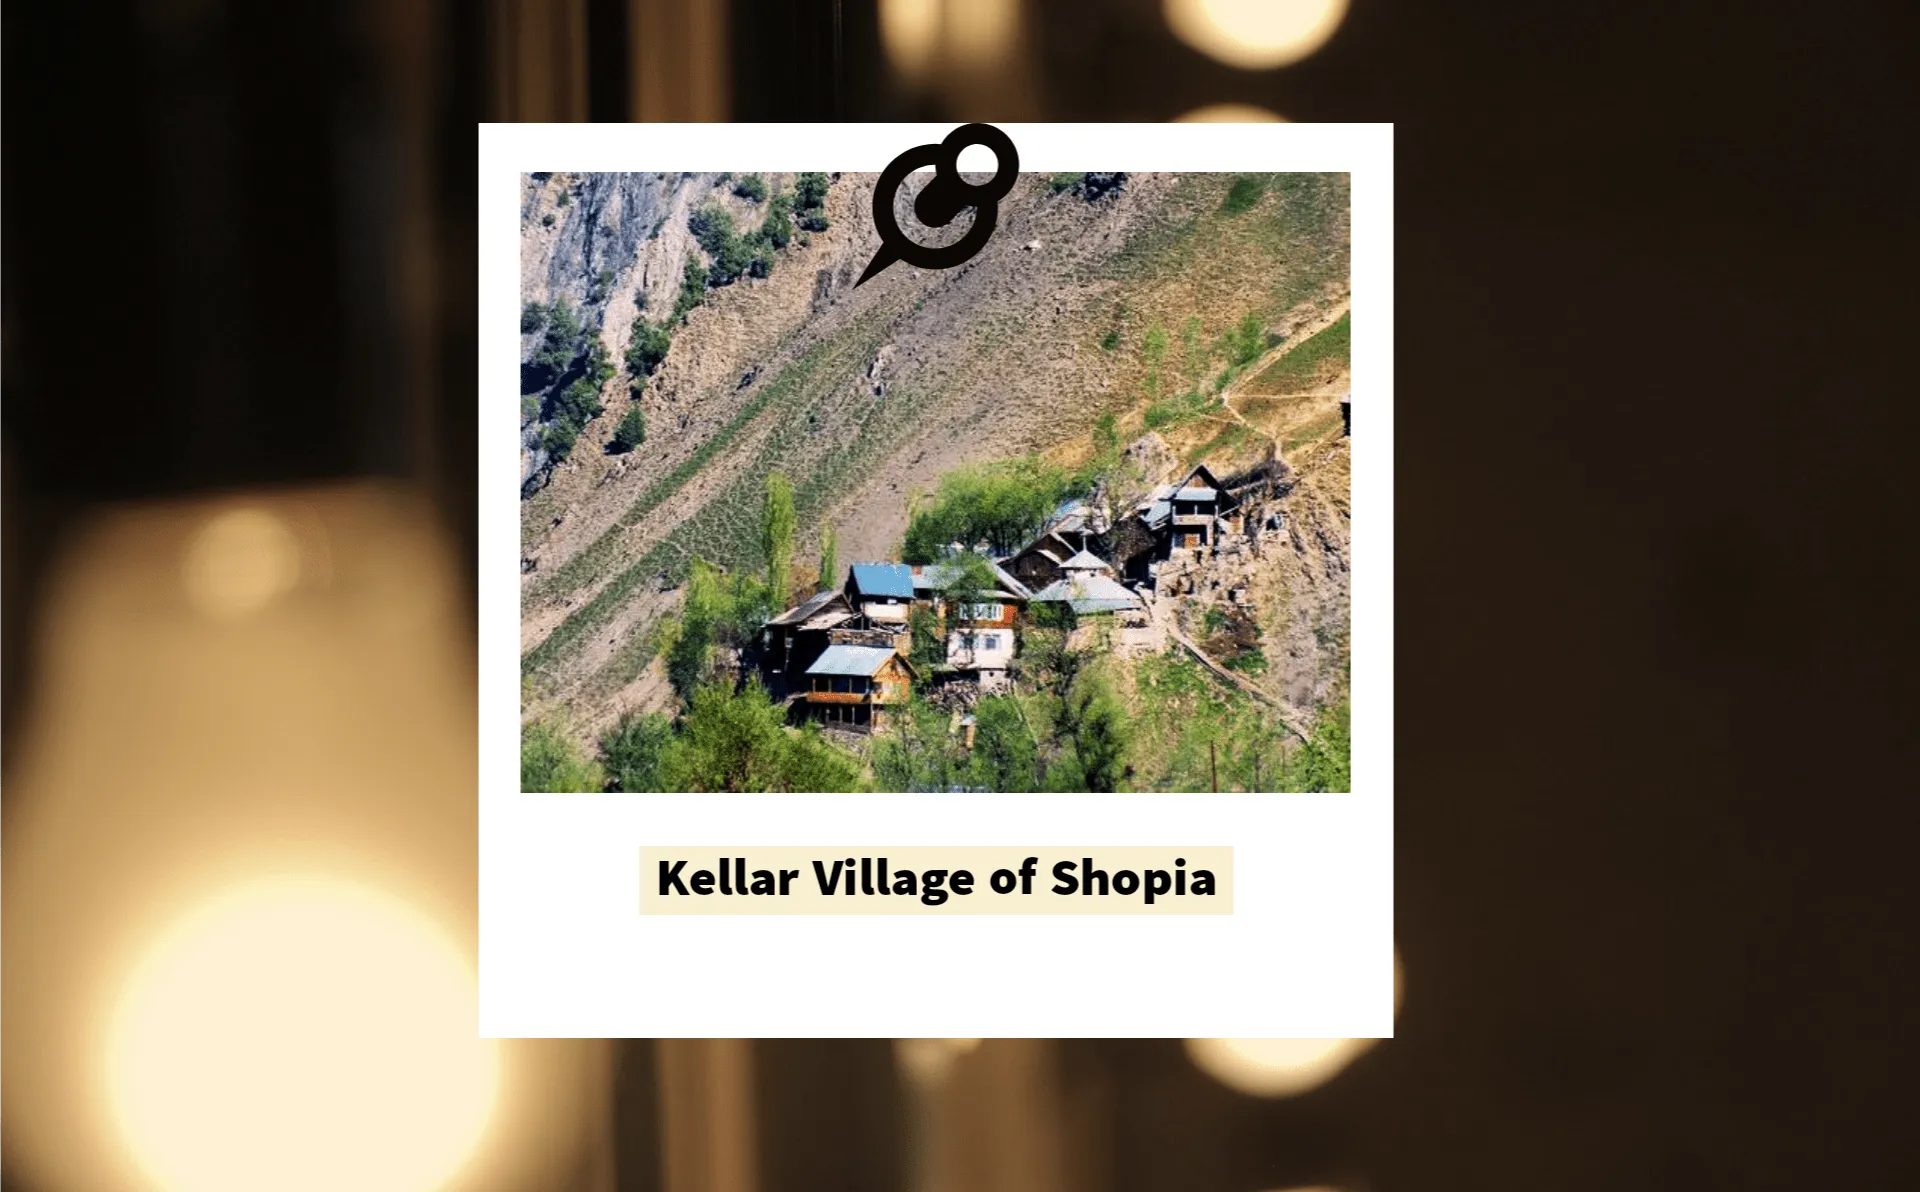 Kellar Village of Shopian electrified